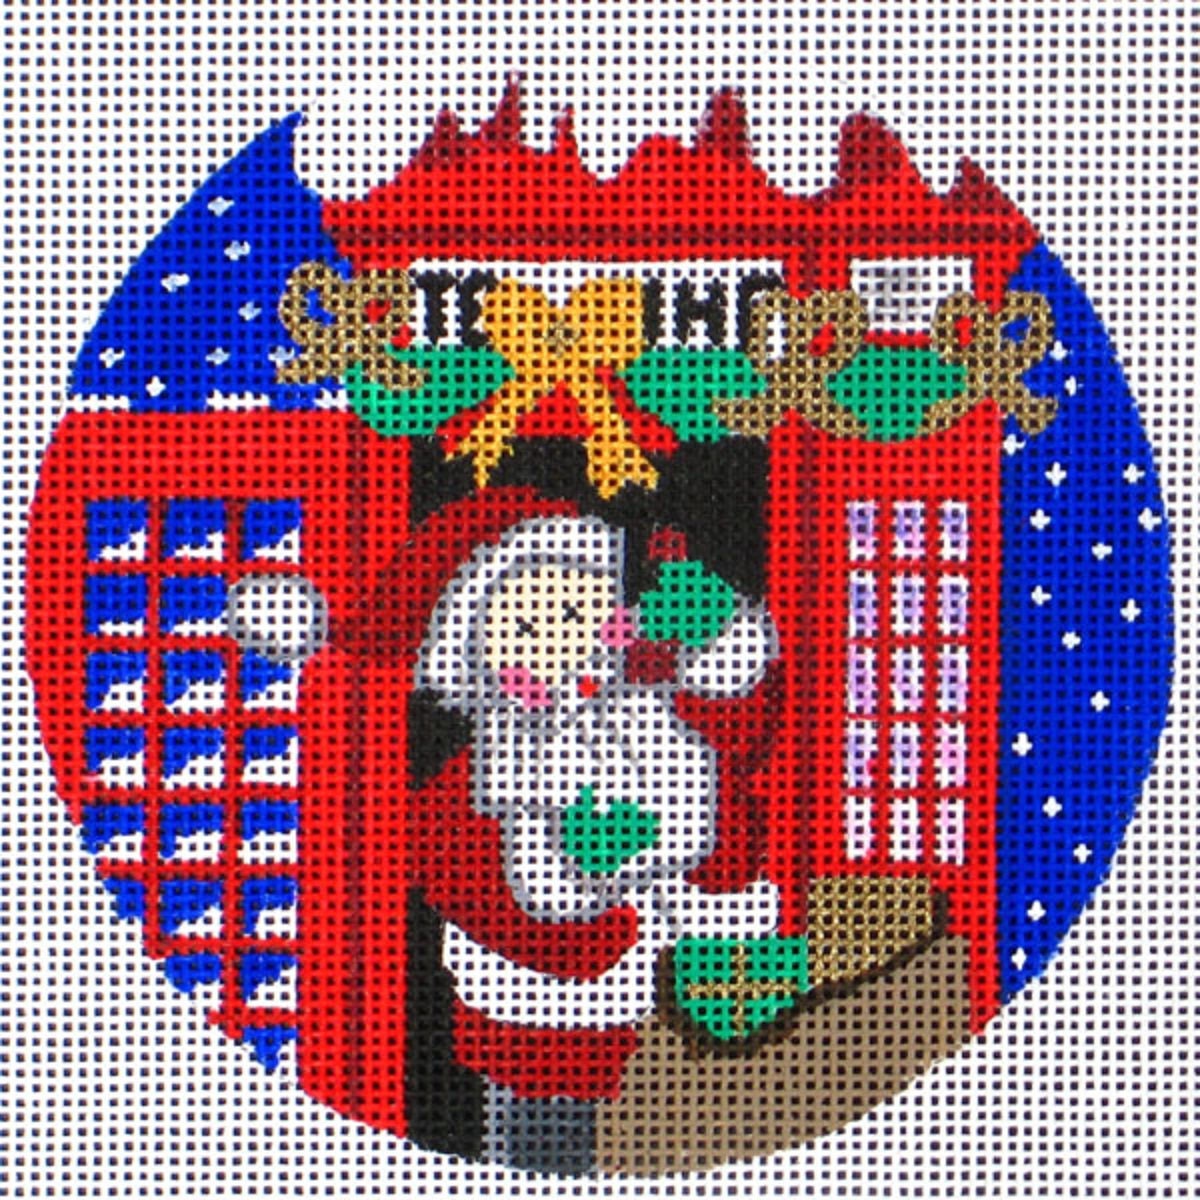 Needlepoint Handpainted Canvas Amanda Lawford Christmas Santa Phone Booth Ornament -Free Us Shipping